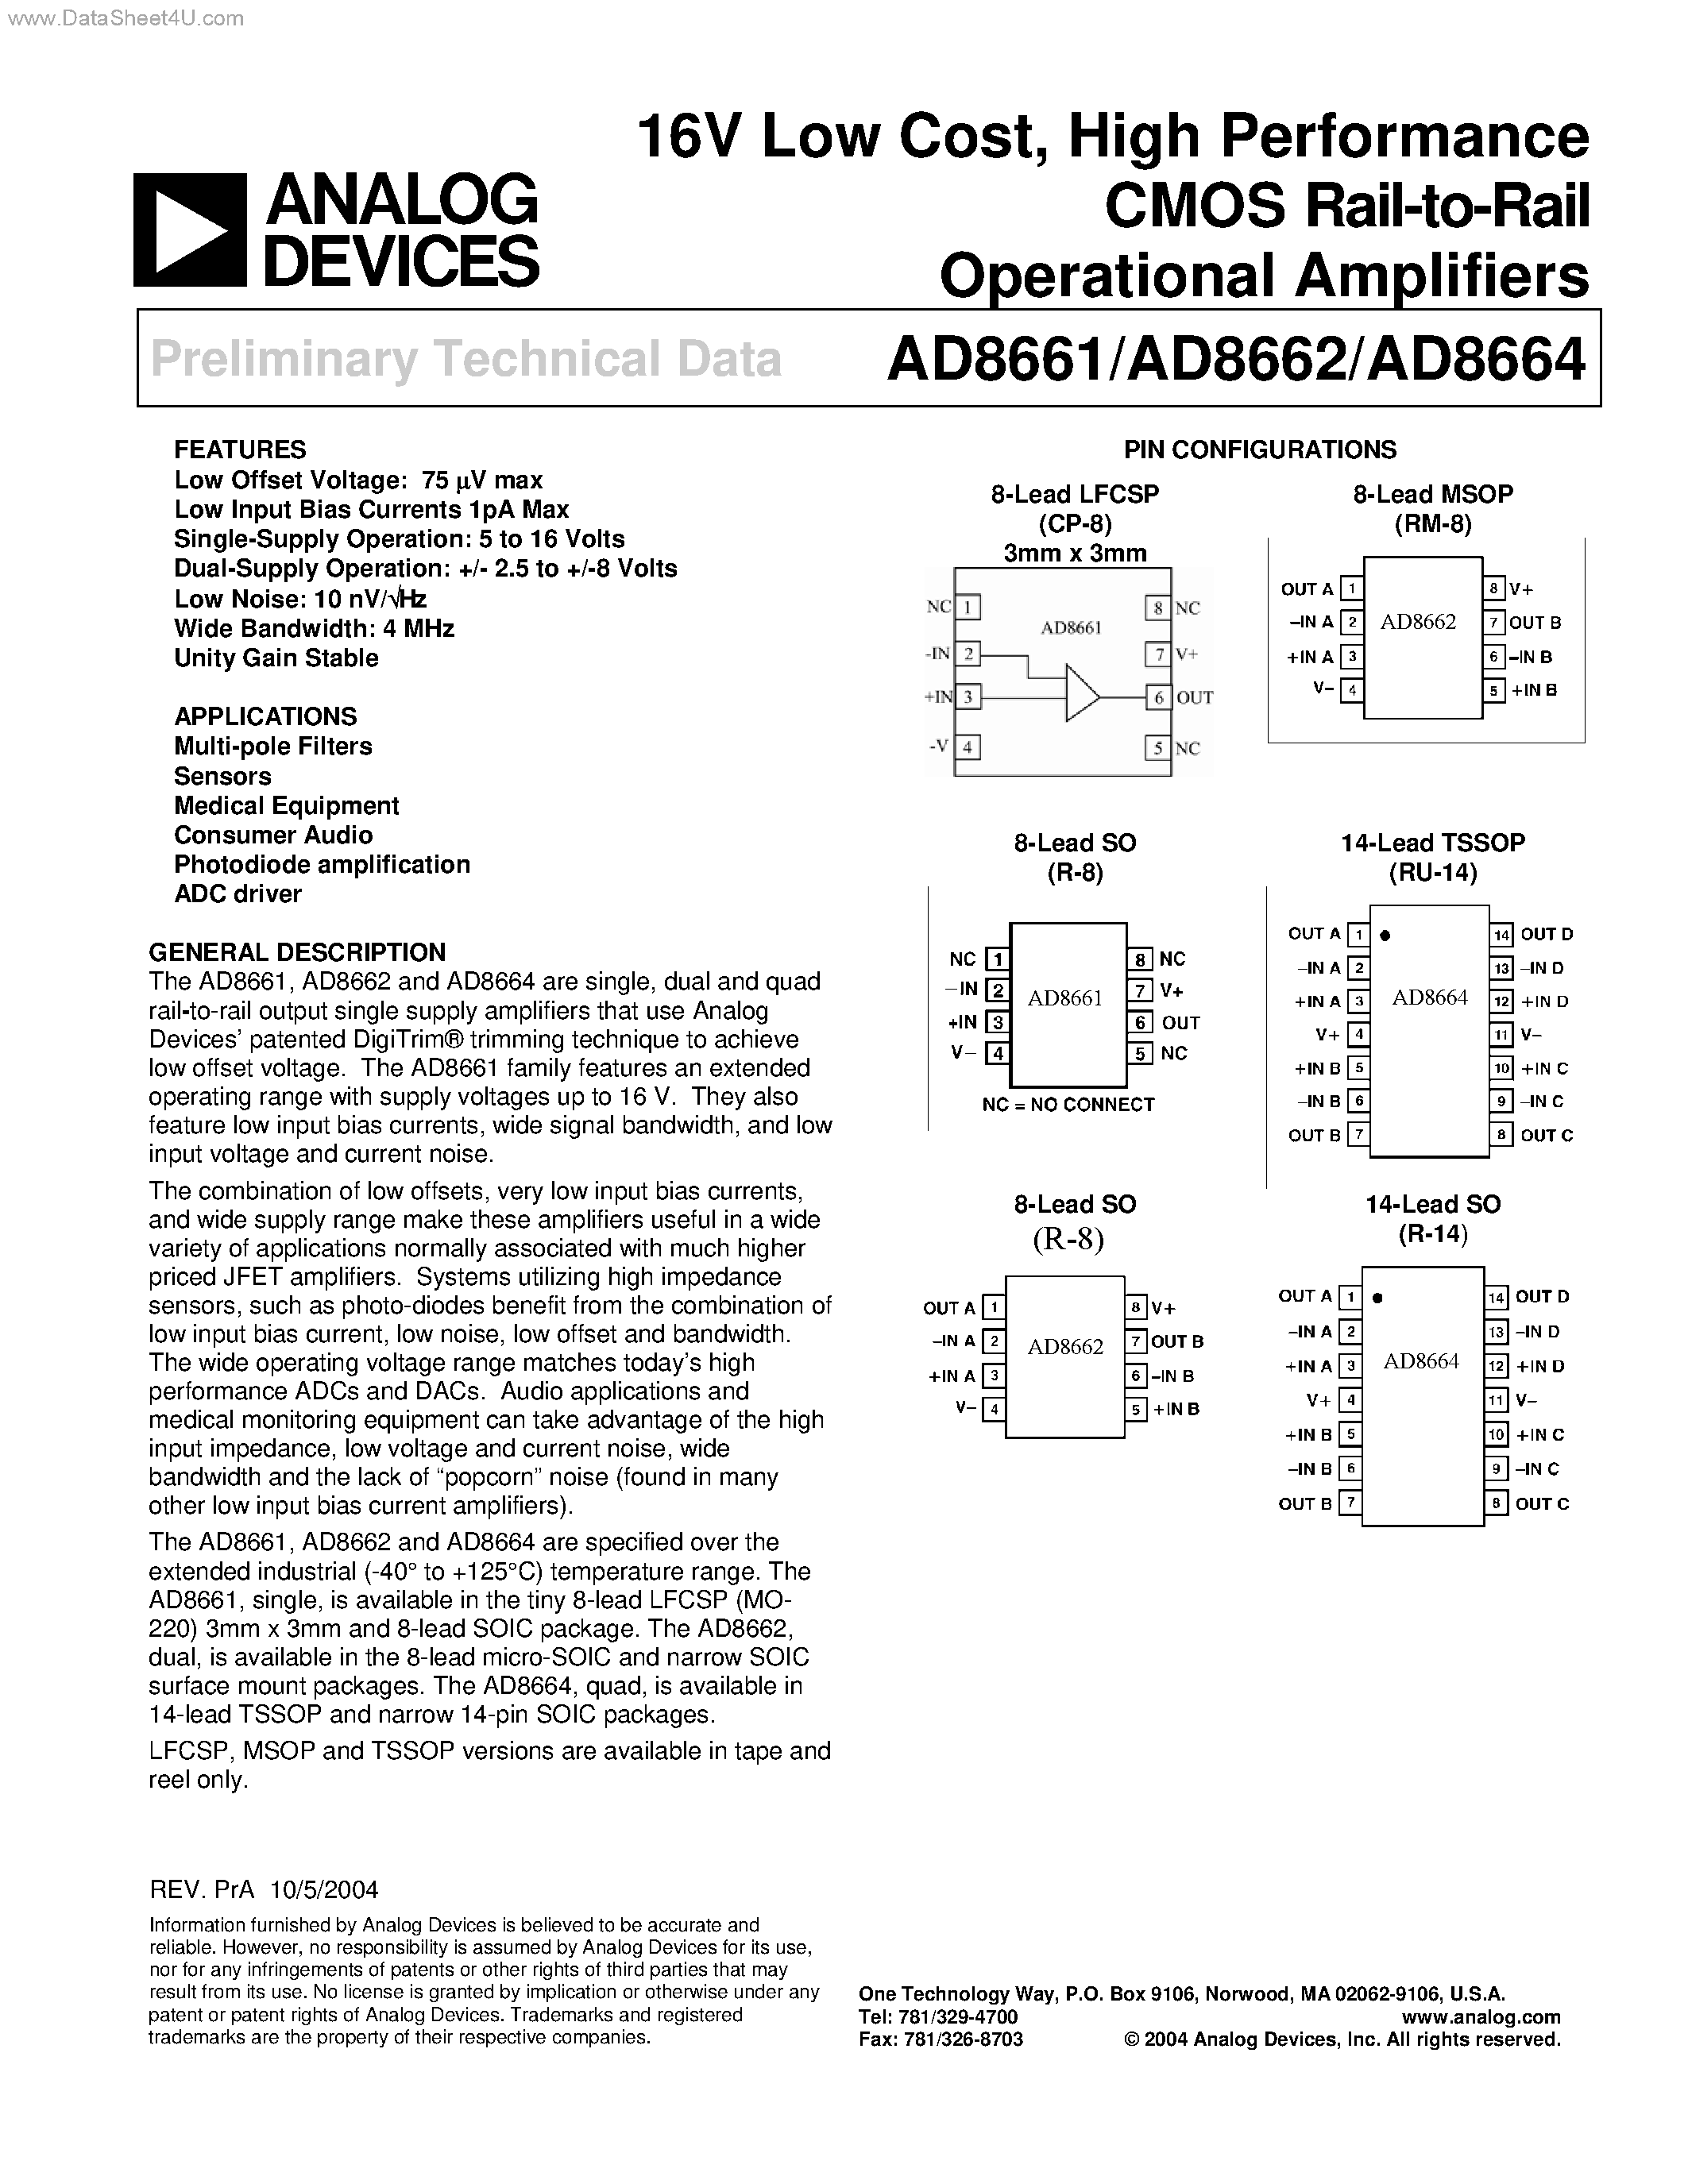 Даташит AD8661 - (AD8661 - AD8664) High Performance CMOS Rail-to-Rail Operational Amplifiers страница 1